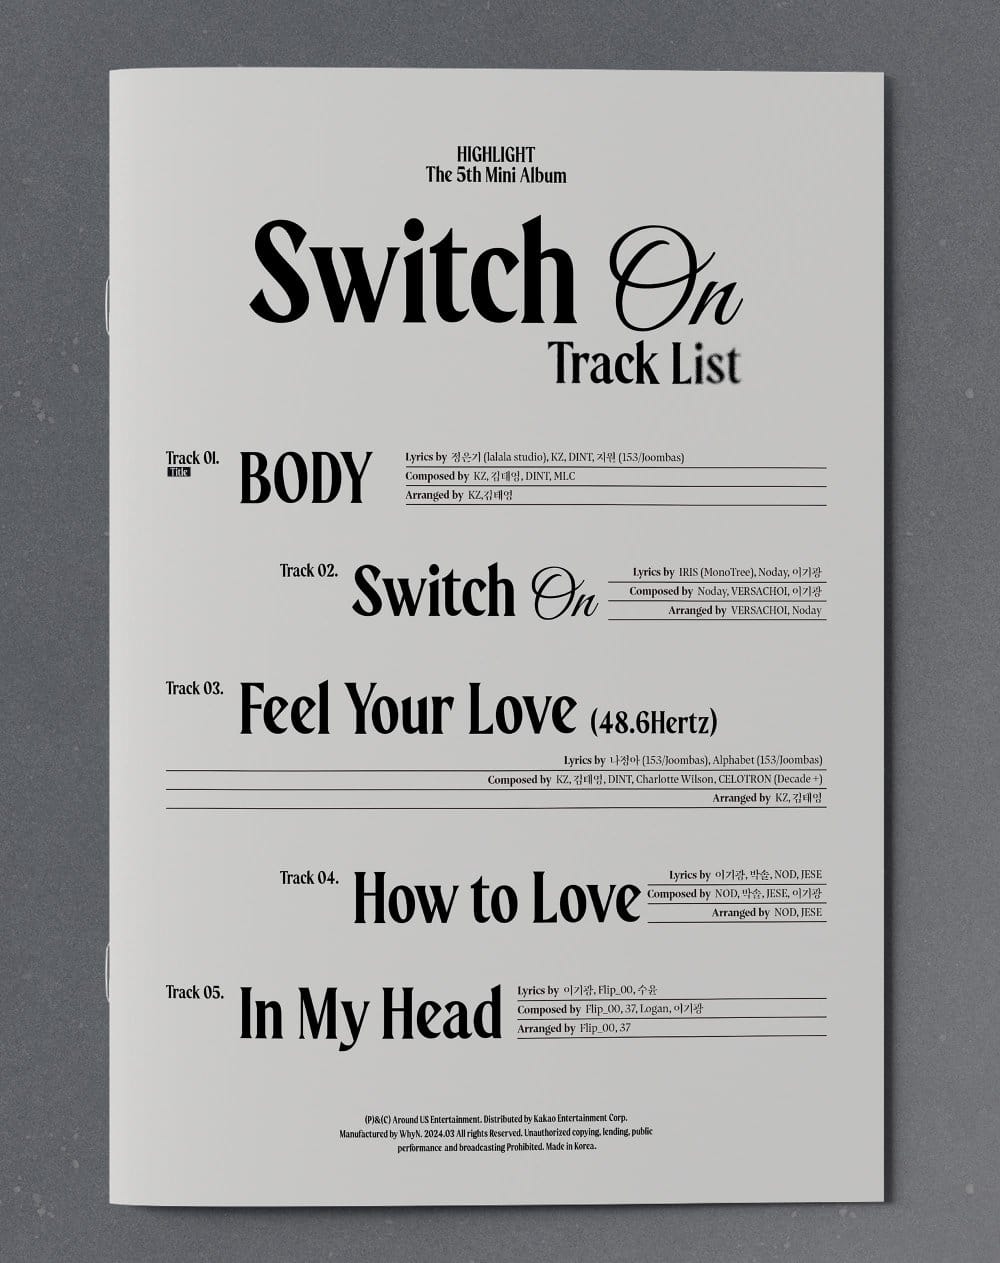 Highlight представляет трек-лист своего 5-го мини-альбома 'Switch On'